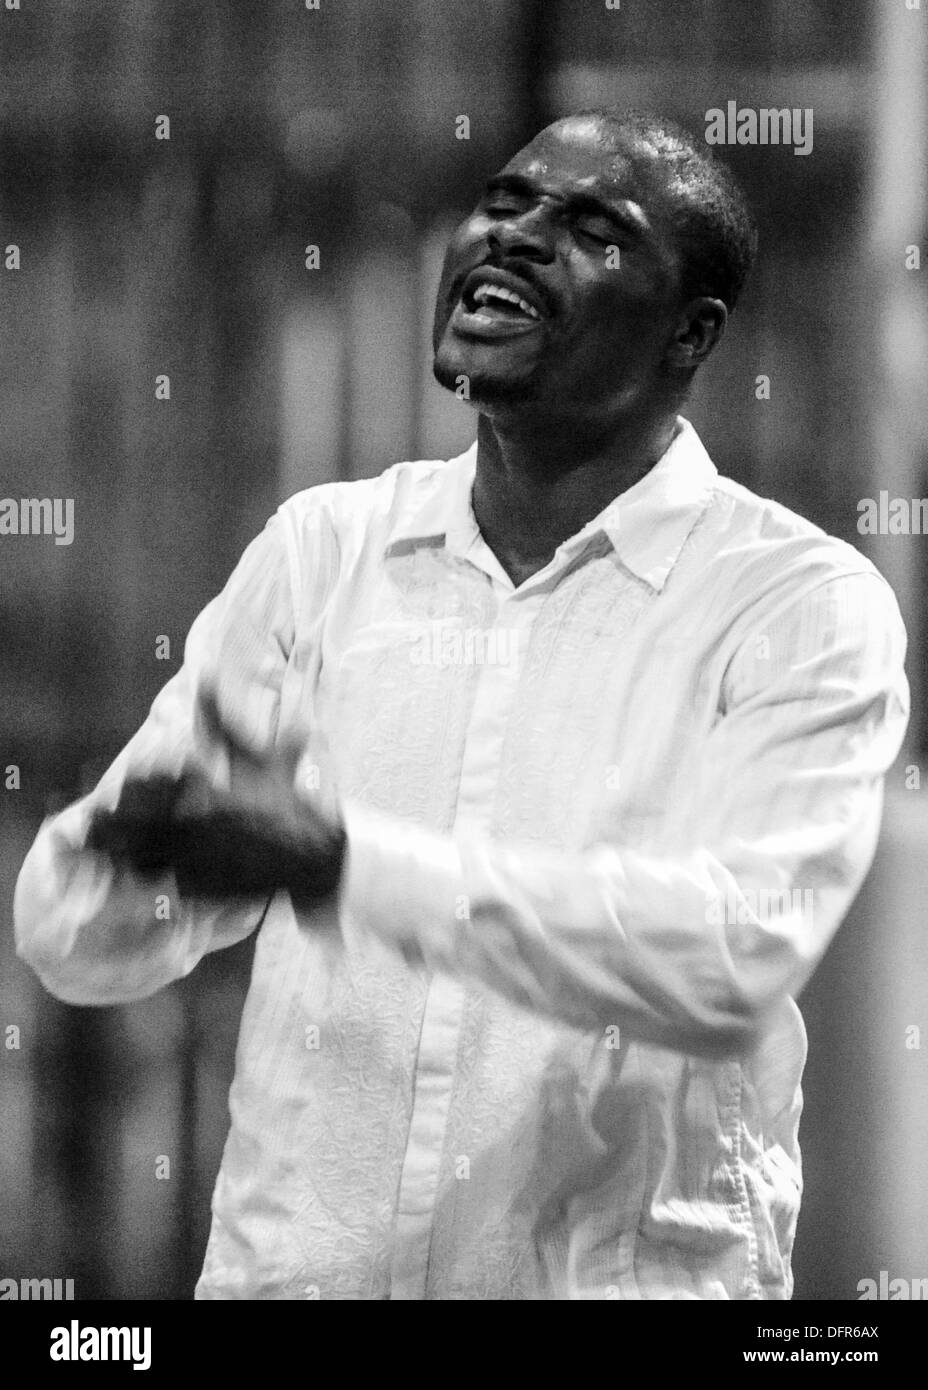 CAMP LEMONNIER, Gibuti (sett. 29, 2013) ingegneria marina Aide di terza classe Giwa Adewale canta durante i servizi religiosi su camp. Foto Stock